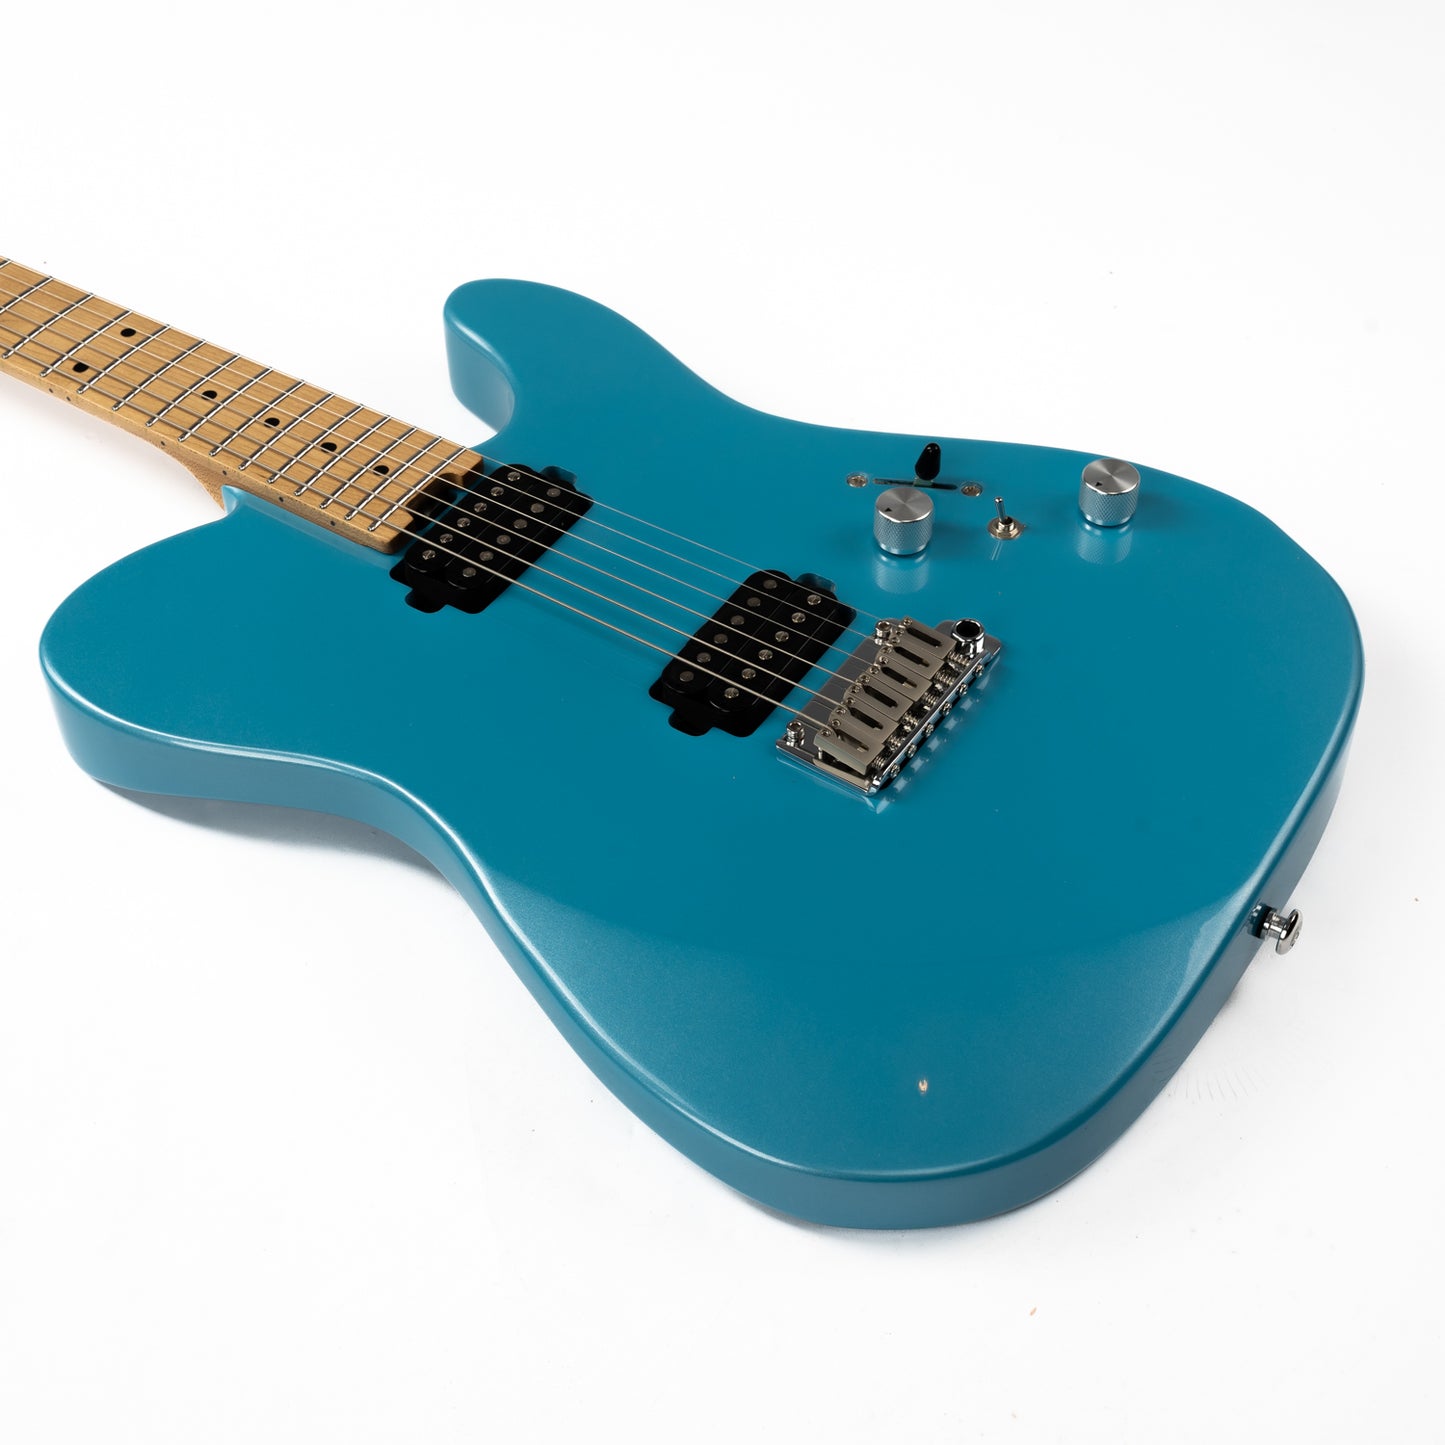 EART electric guitar TL-380 pearl blue